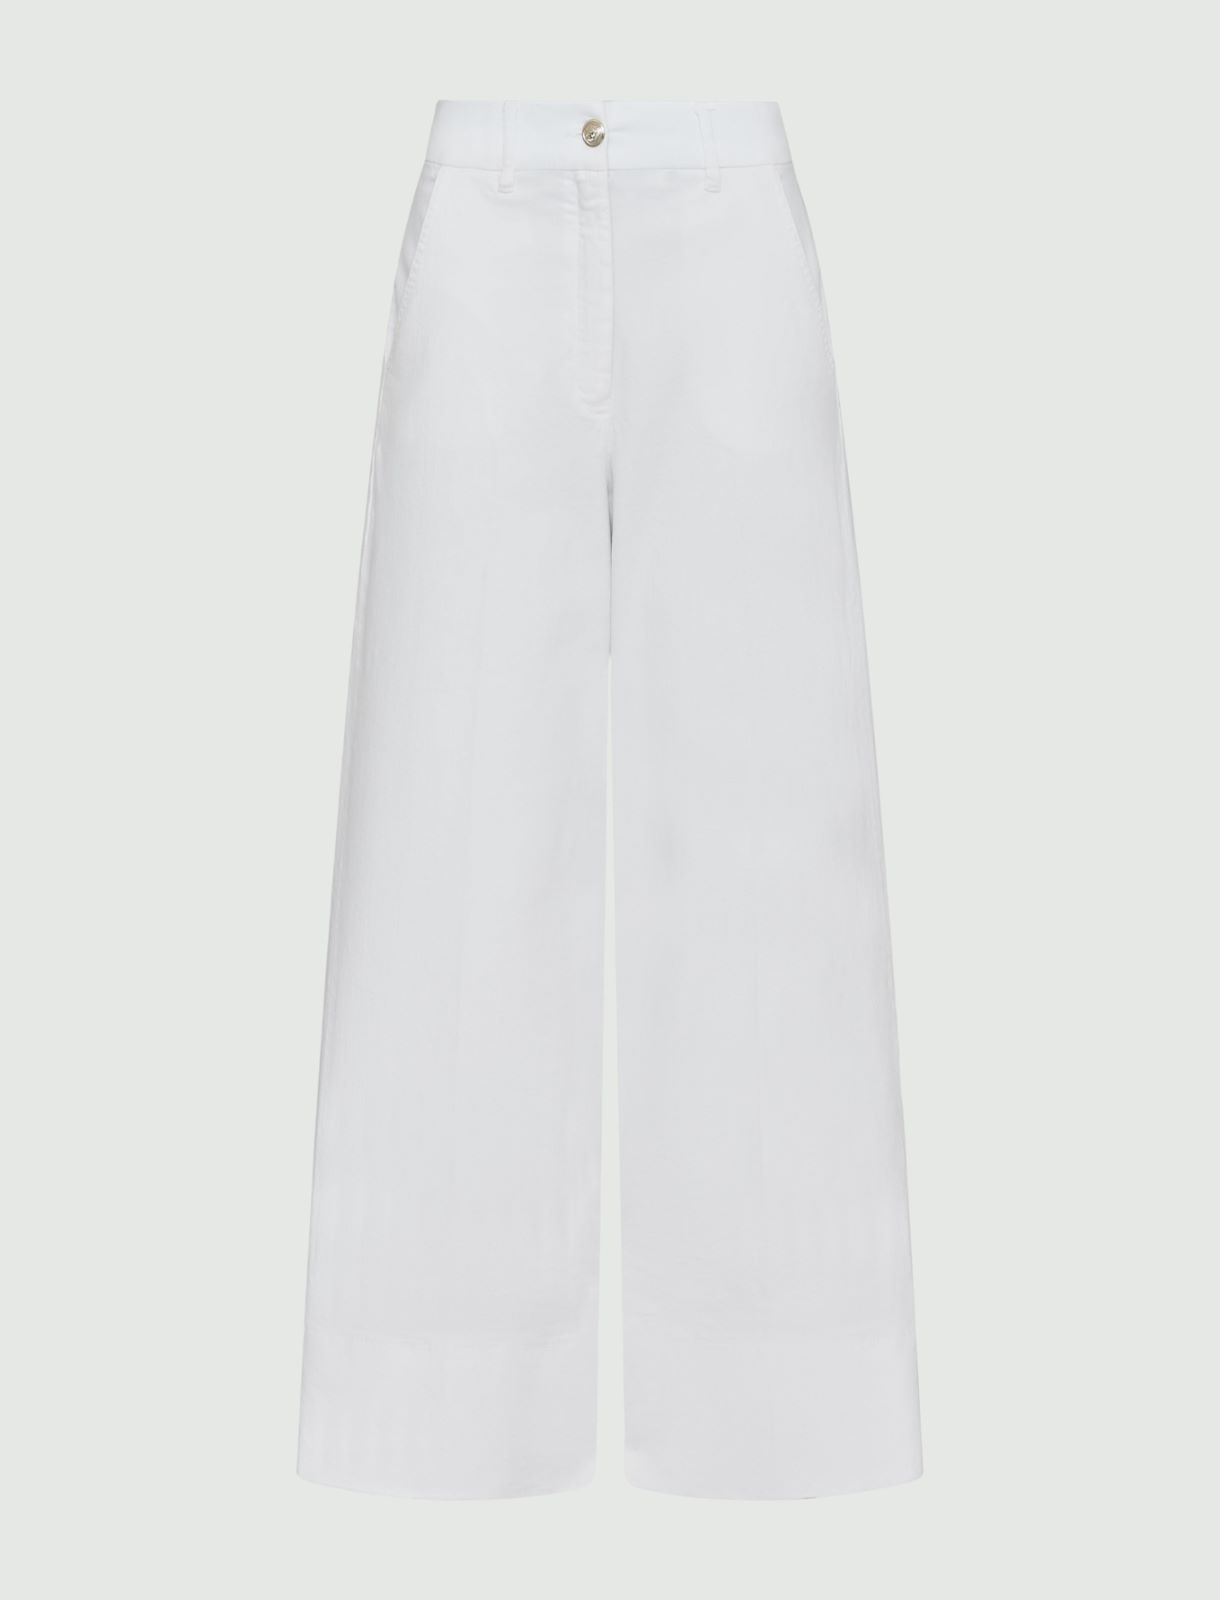 Wide-leg trousers, white